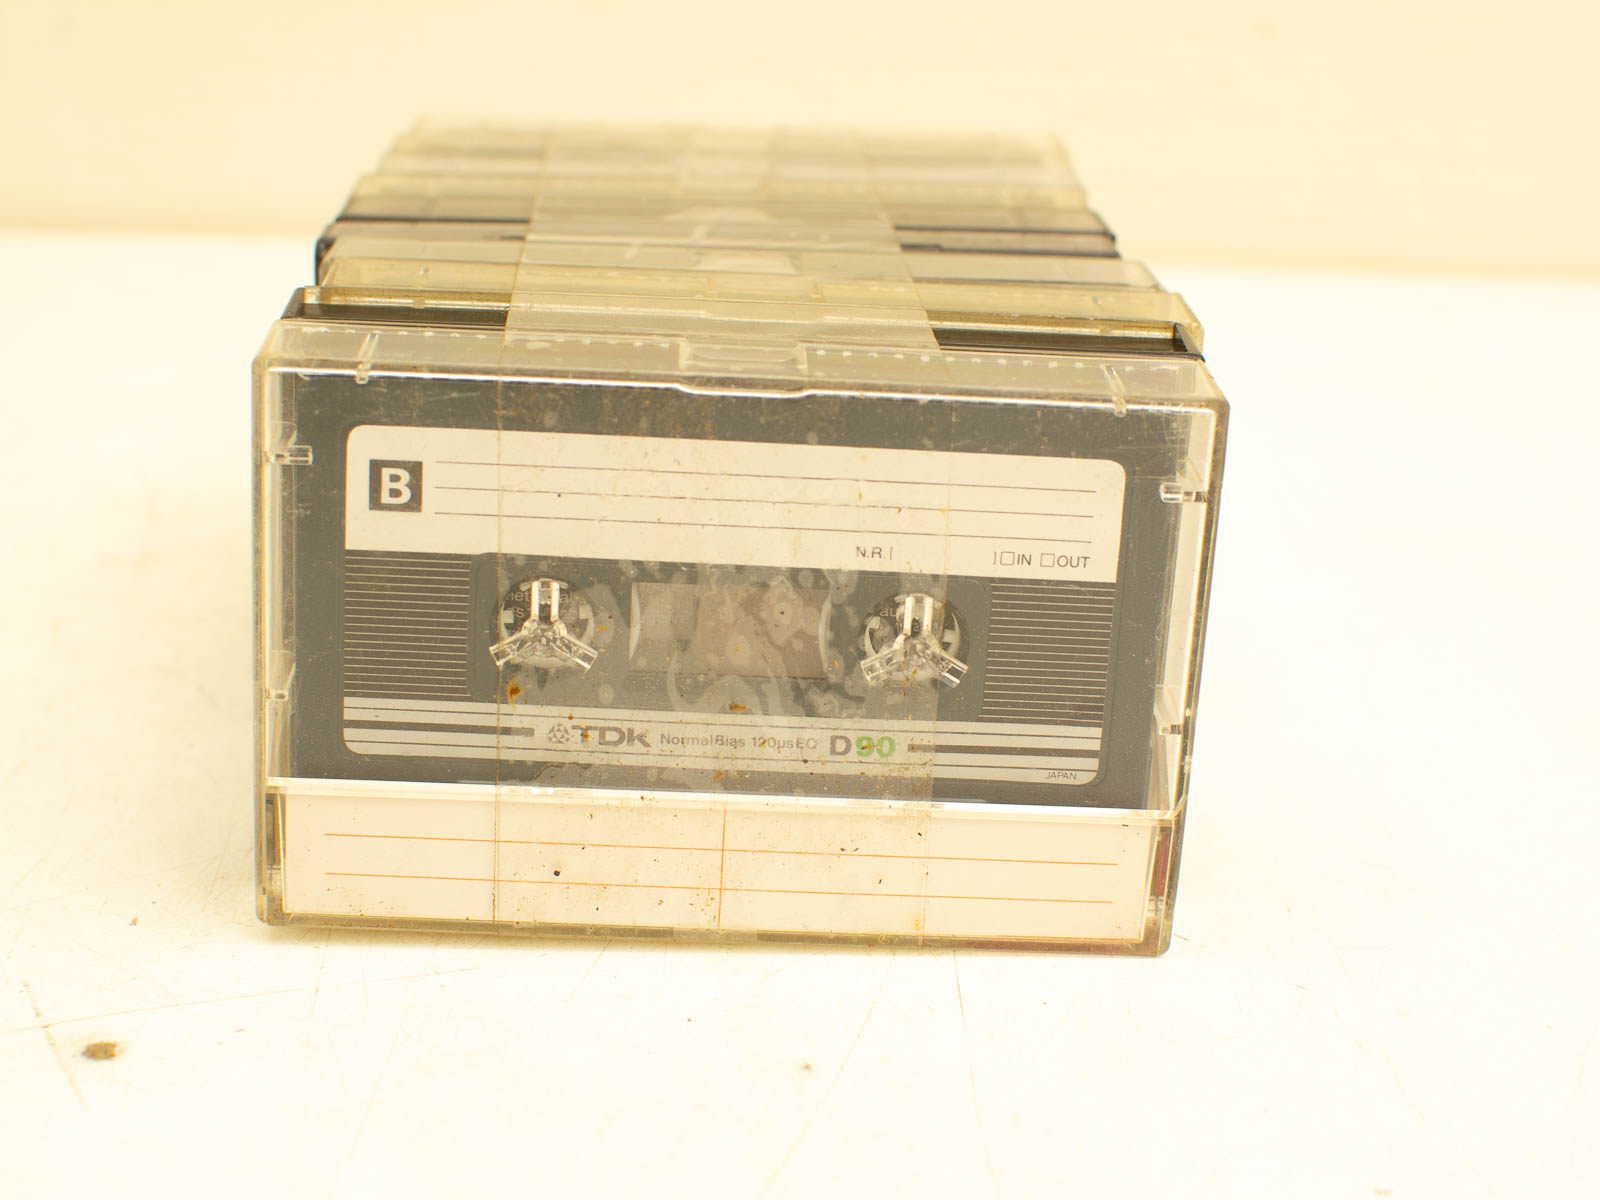 10 Tdk cassettebandjes 31262